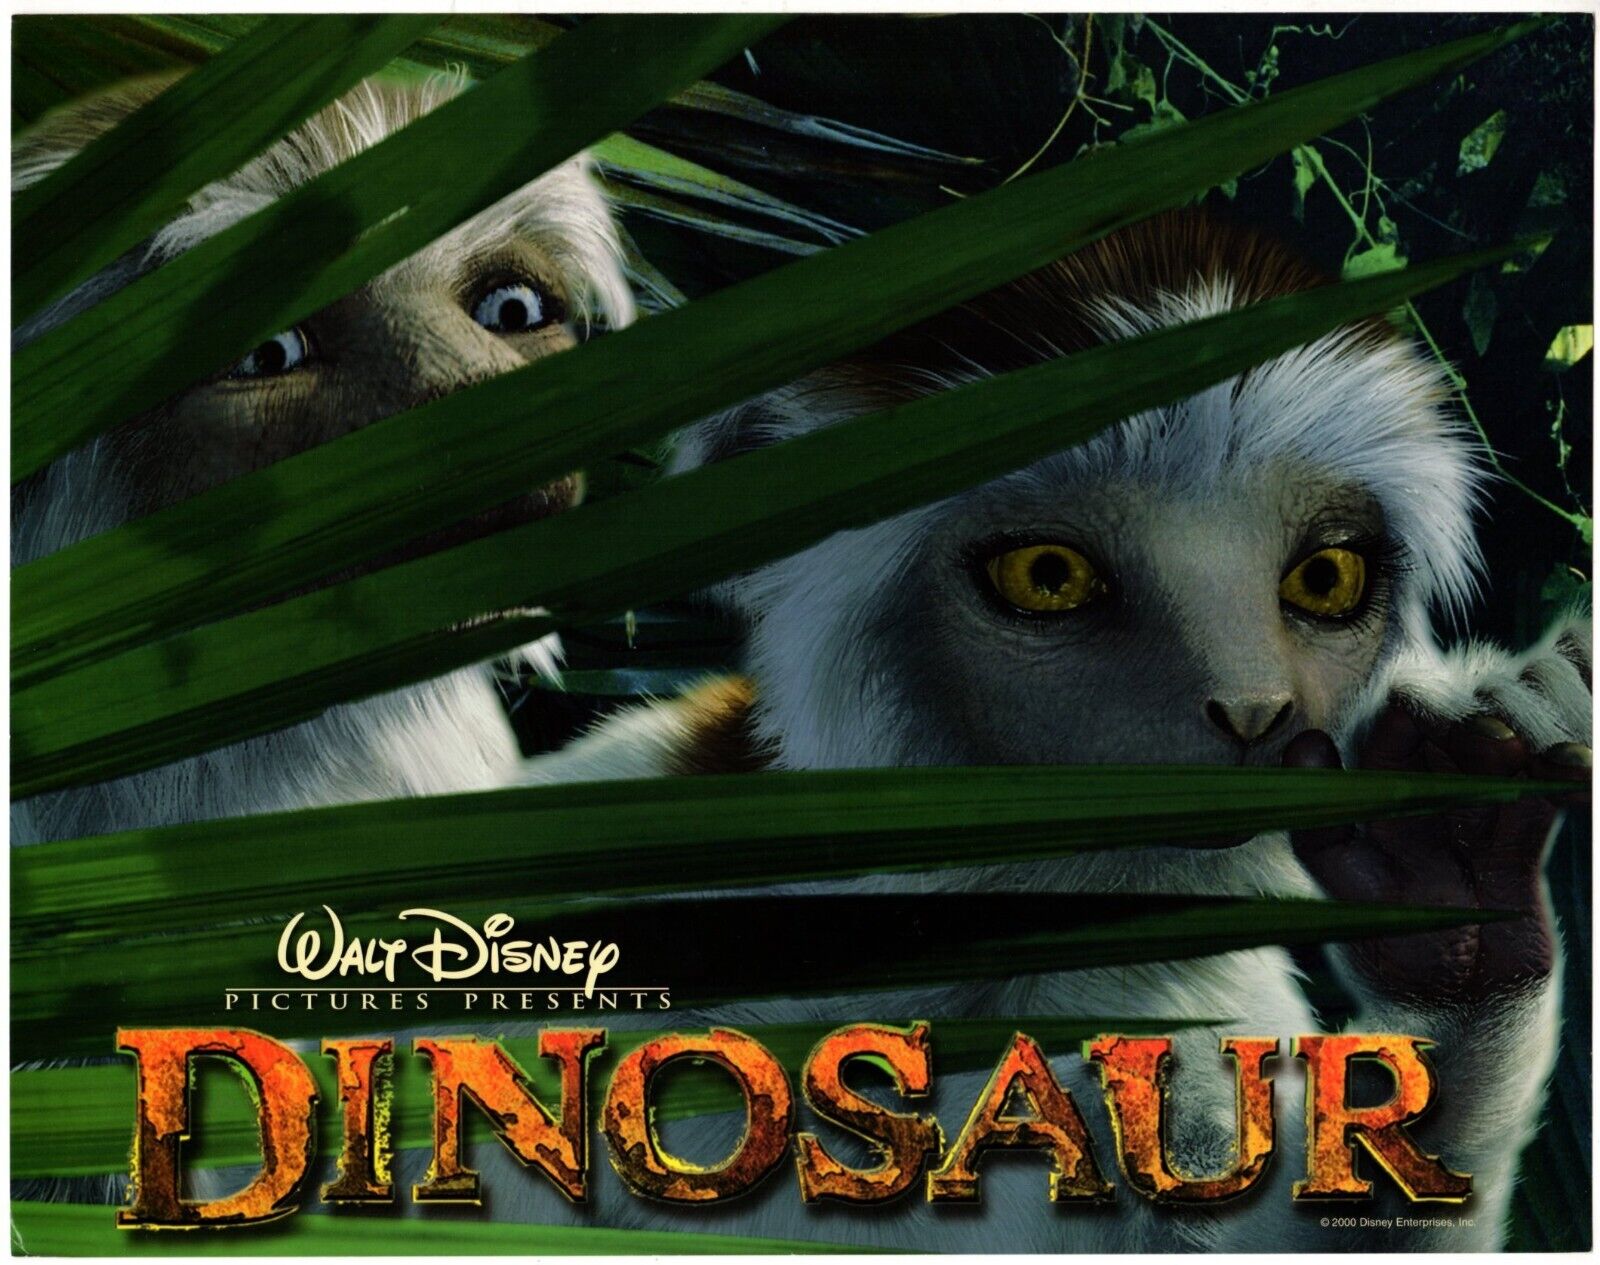 *walt Disney's Dinosaur (2000) Orphaned Dinosaur Seeks Refuge After Meteor Hit 9